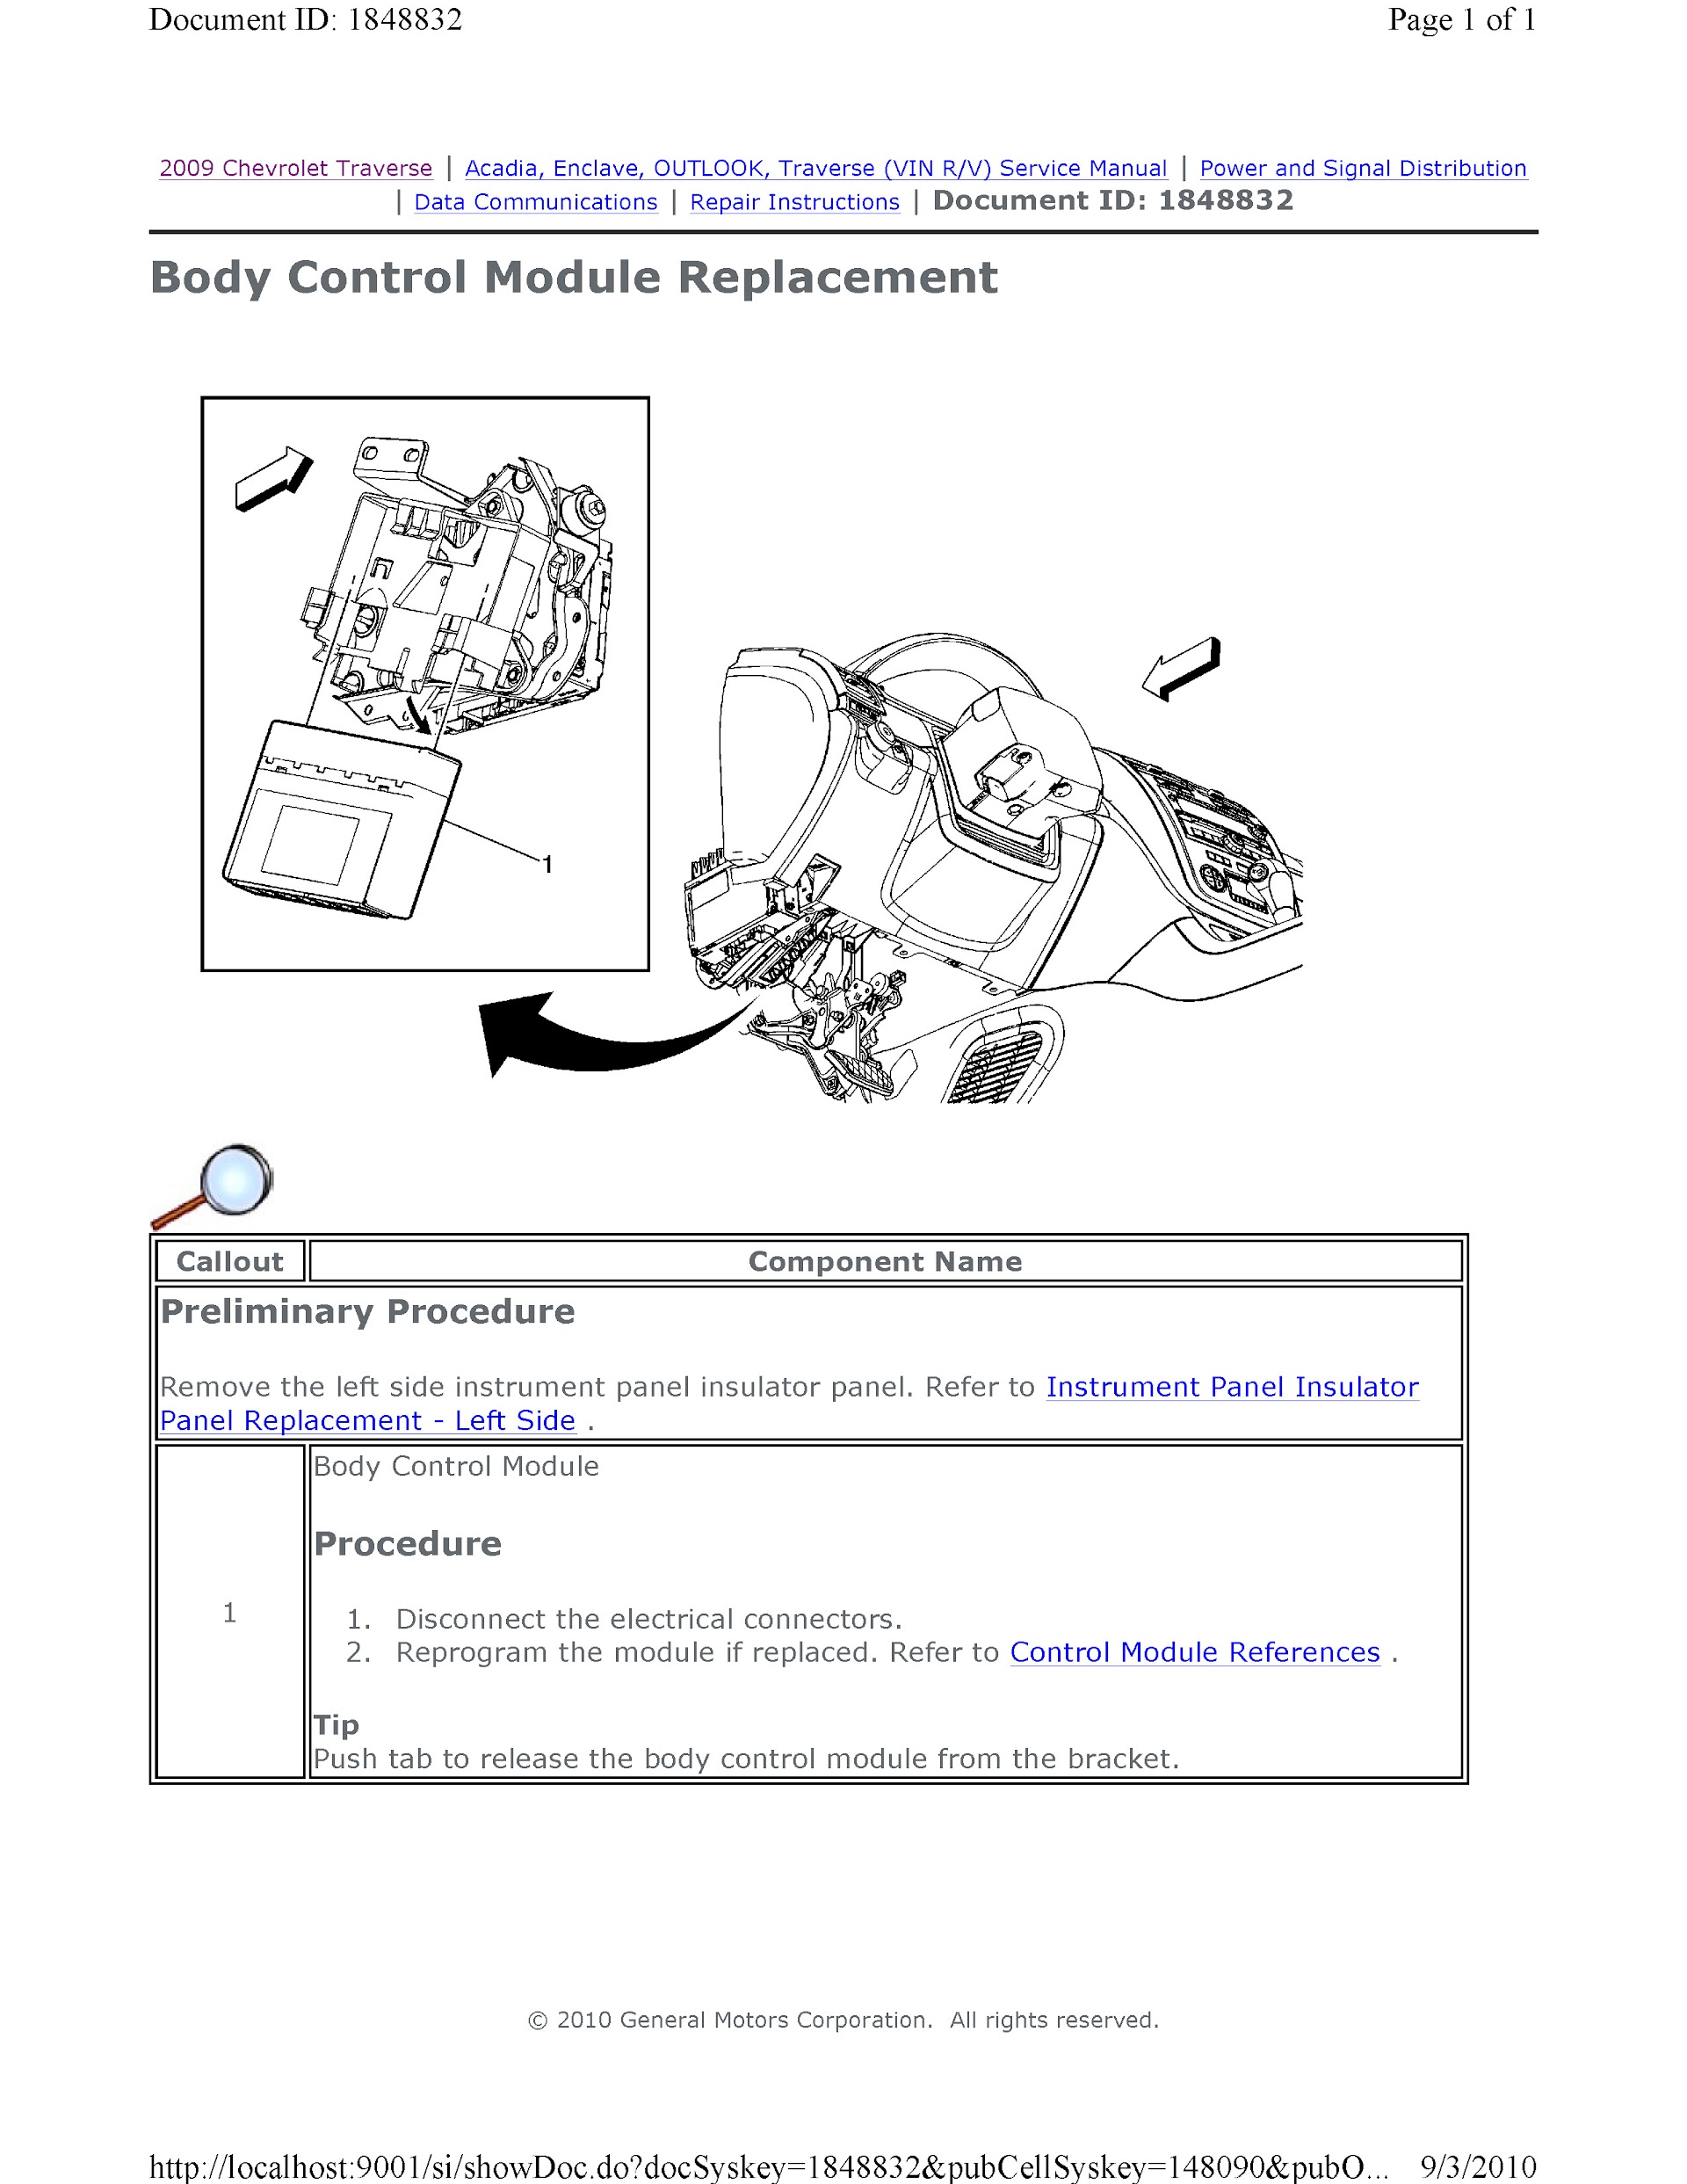 CONTENTS: 2009-2010 Chevrolet Traverse Repair Manual, Body Control Module Repalcement